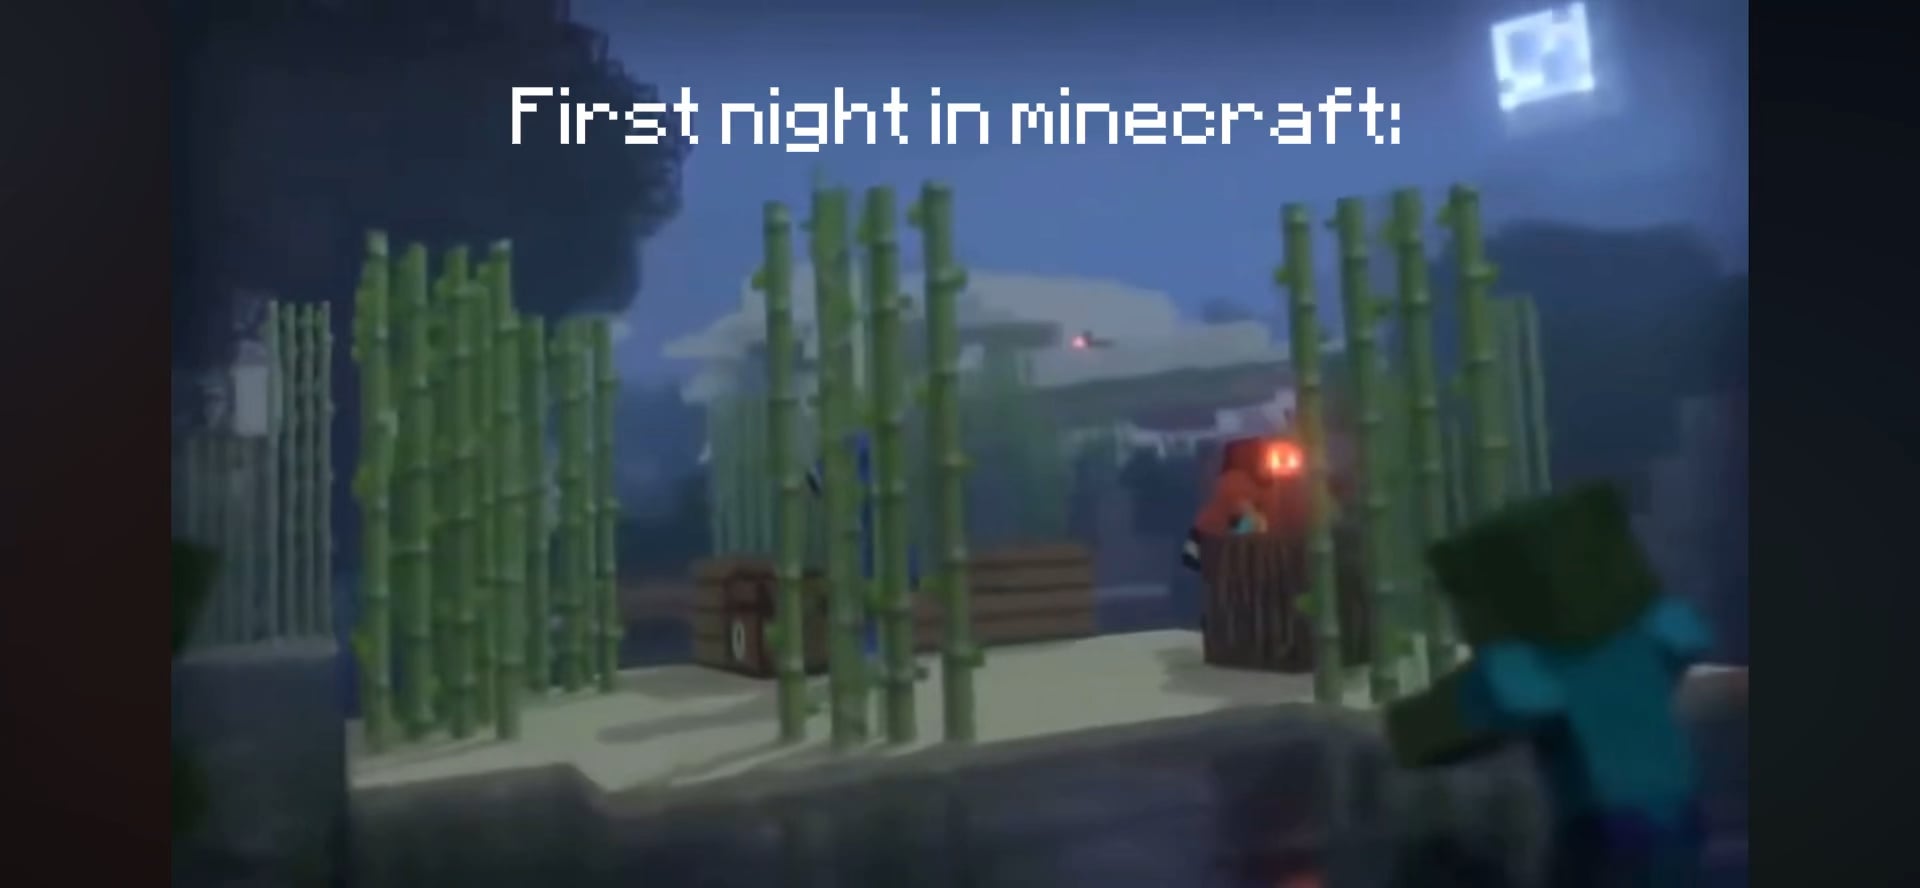 Minecraft Memes - "First night in Minecraft: Panic Mode"